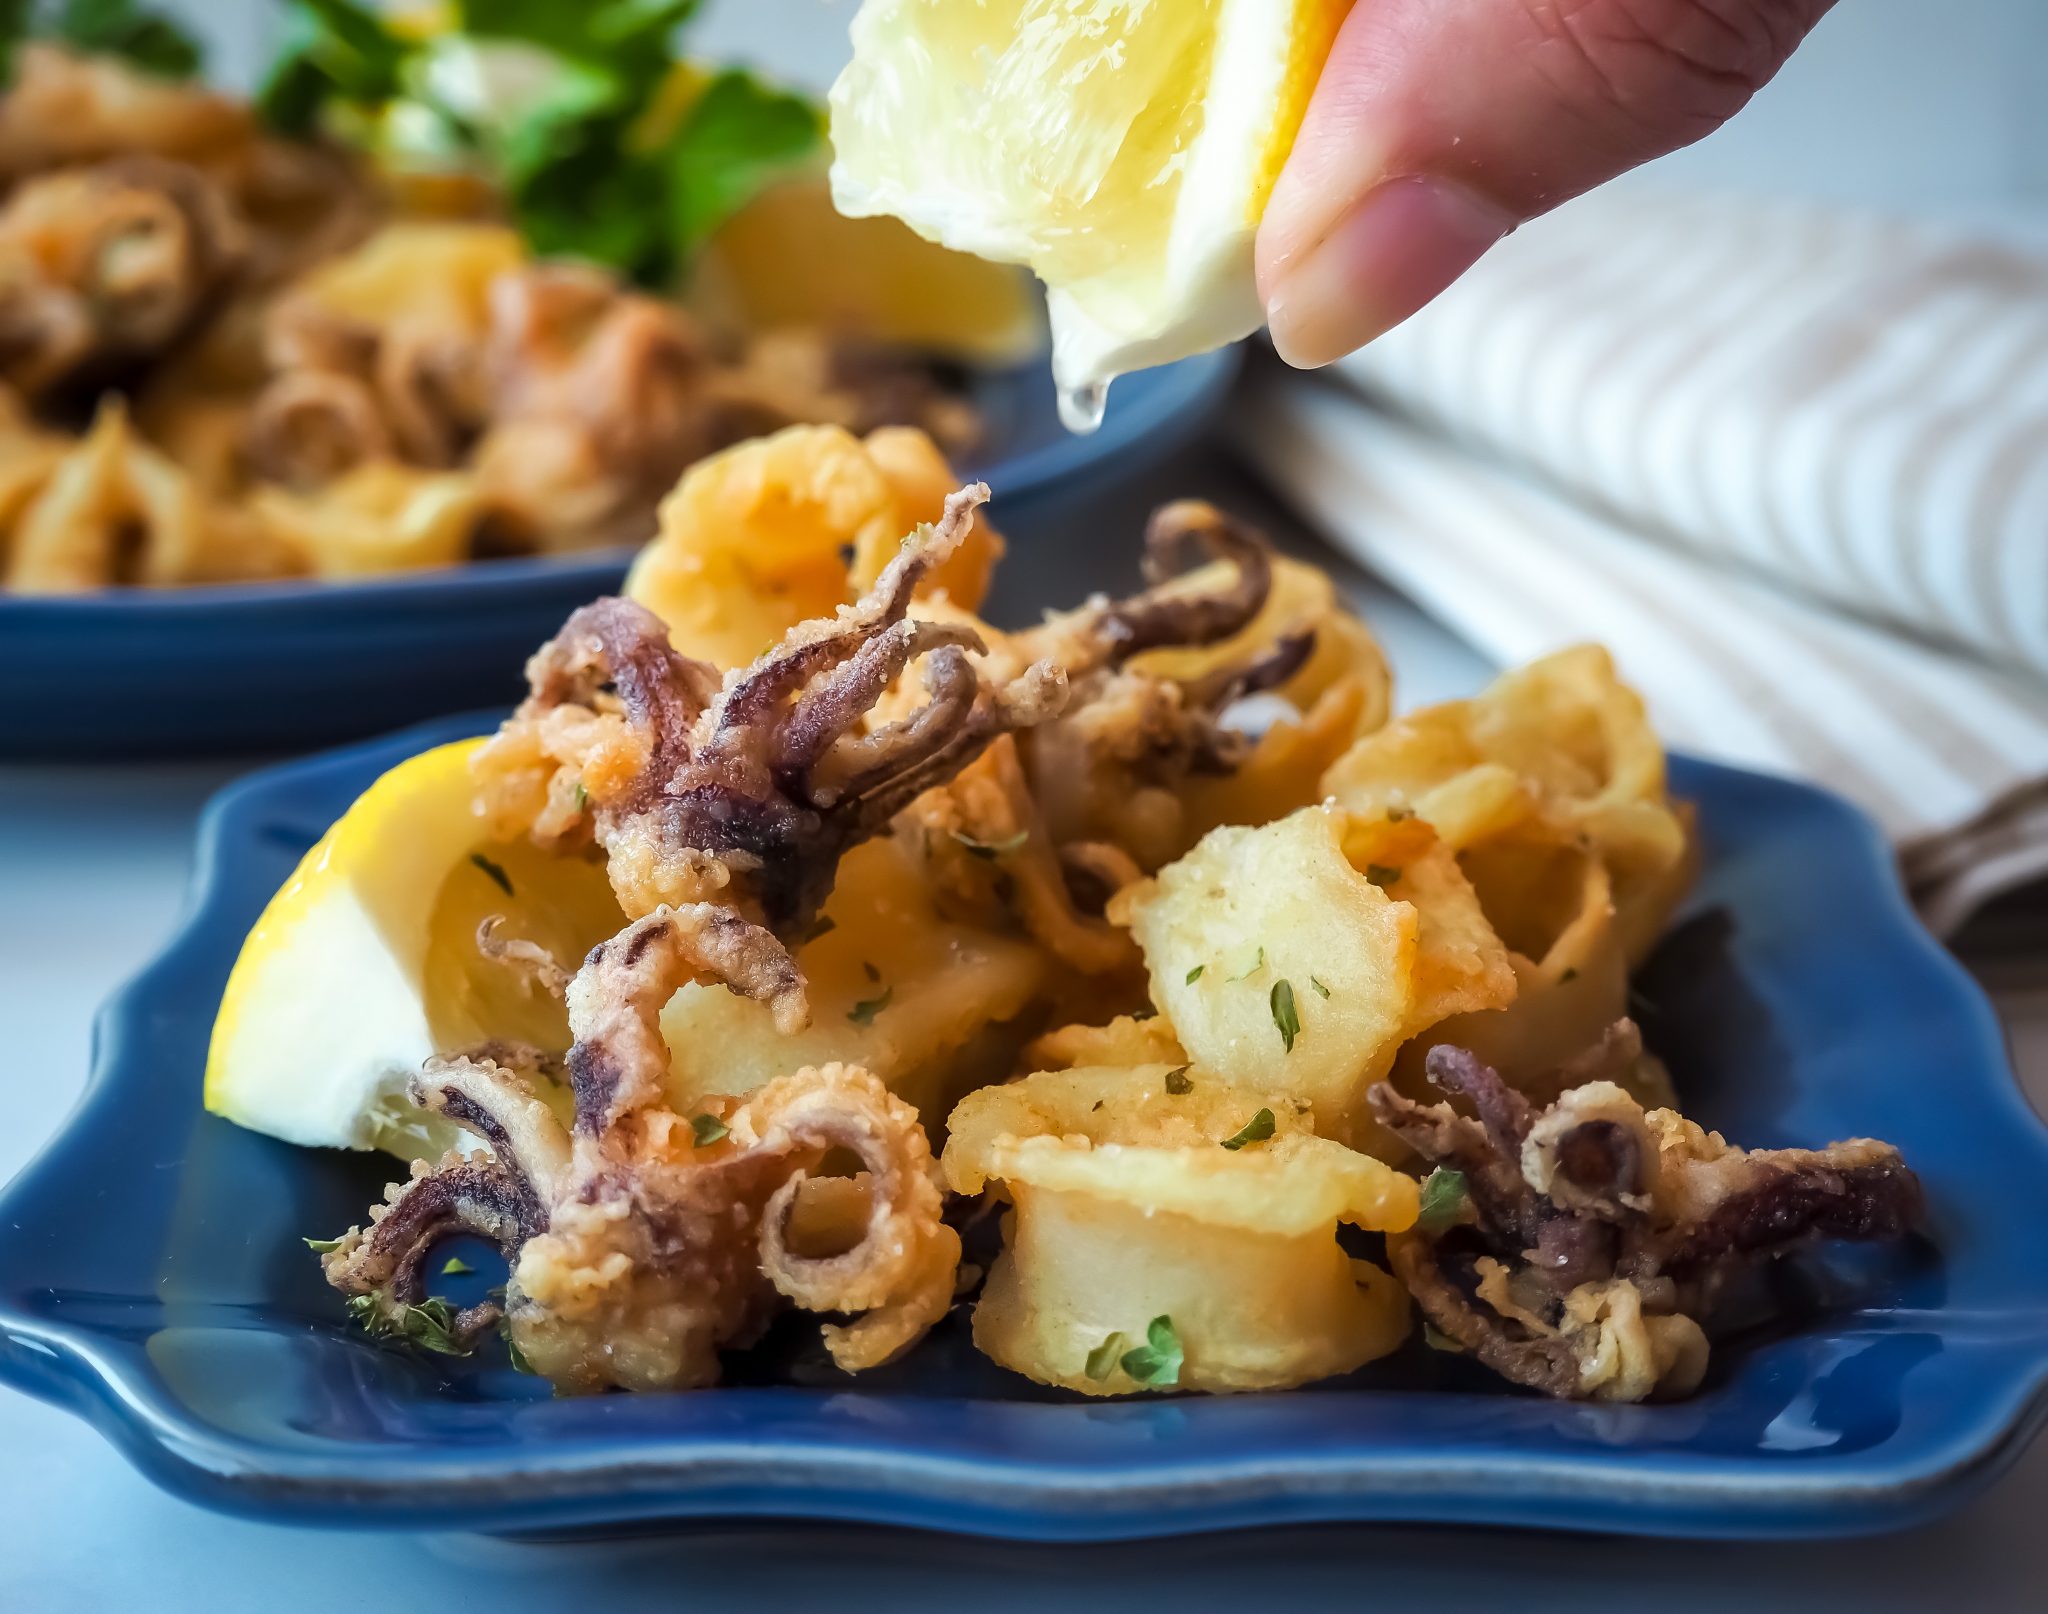 Fried Calamari Recipe - How to Make Crispy and Delicious Calamari!